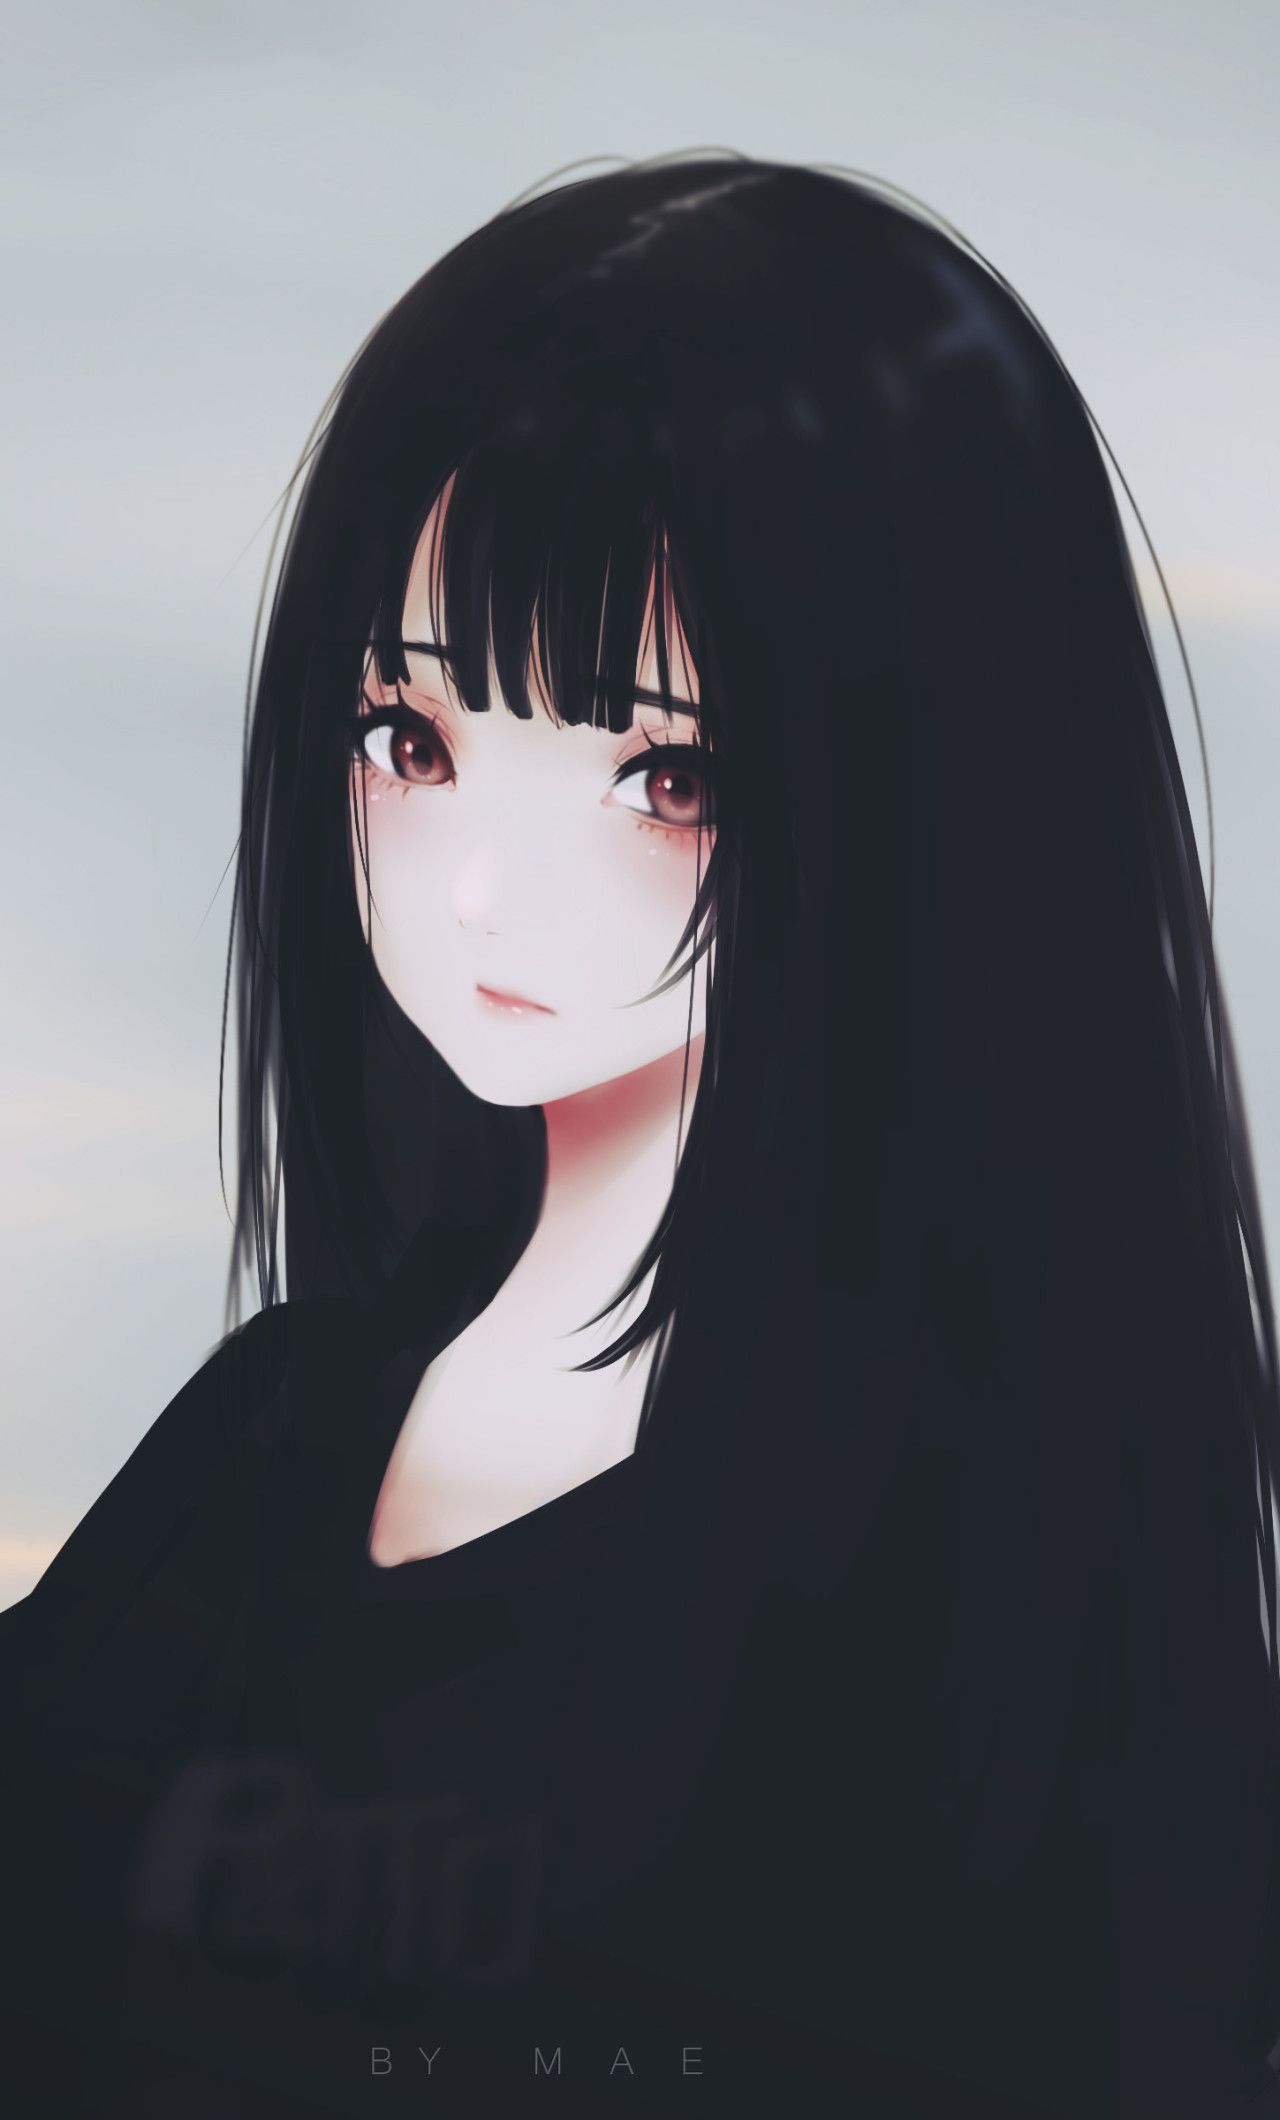 Sad Anime Girl Wallpaper iPhone